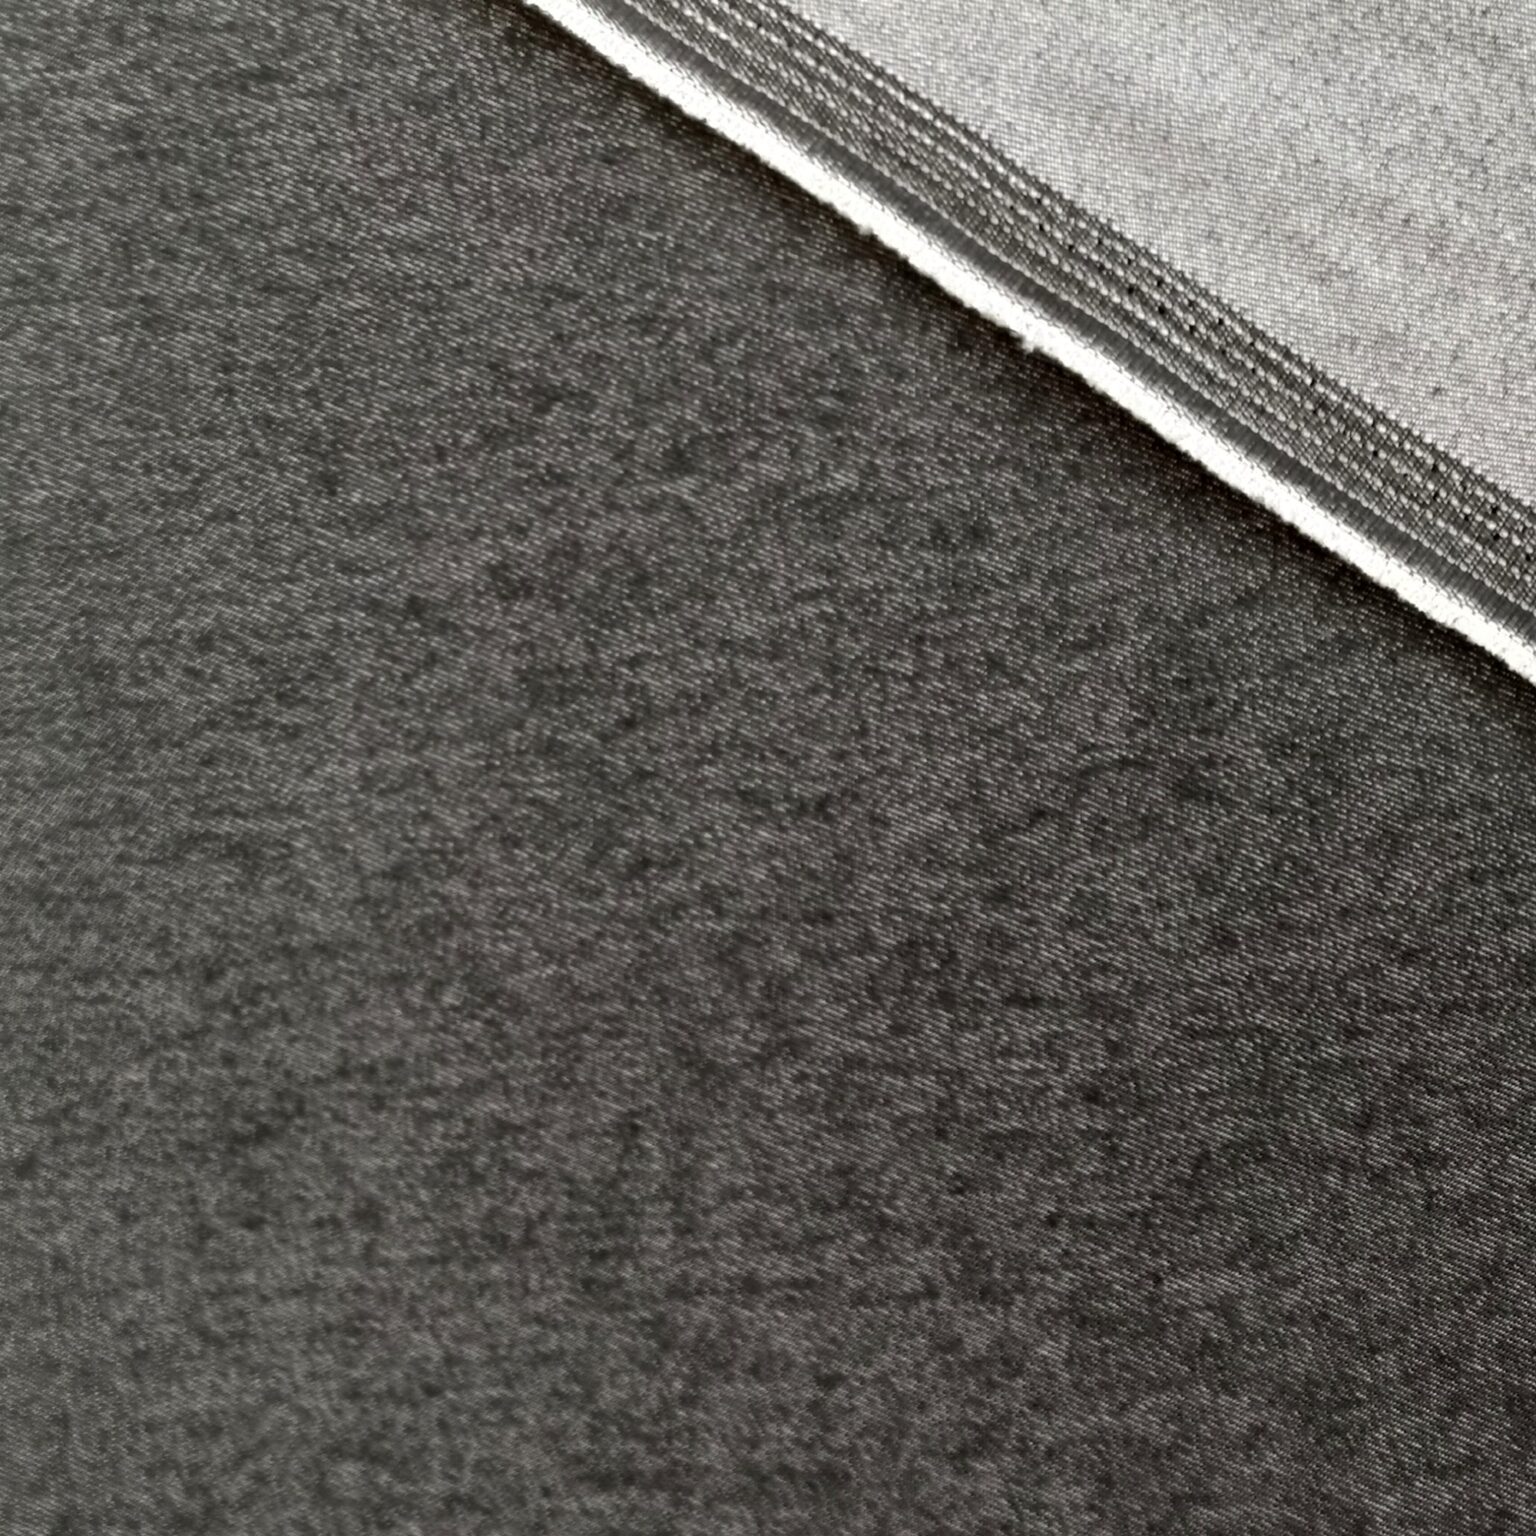 Stretch Denim Fabric - Black 9oz - 150cm Wide